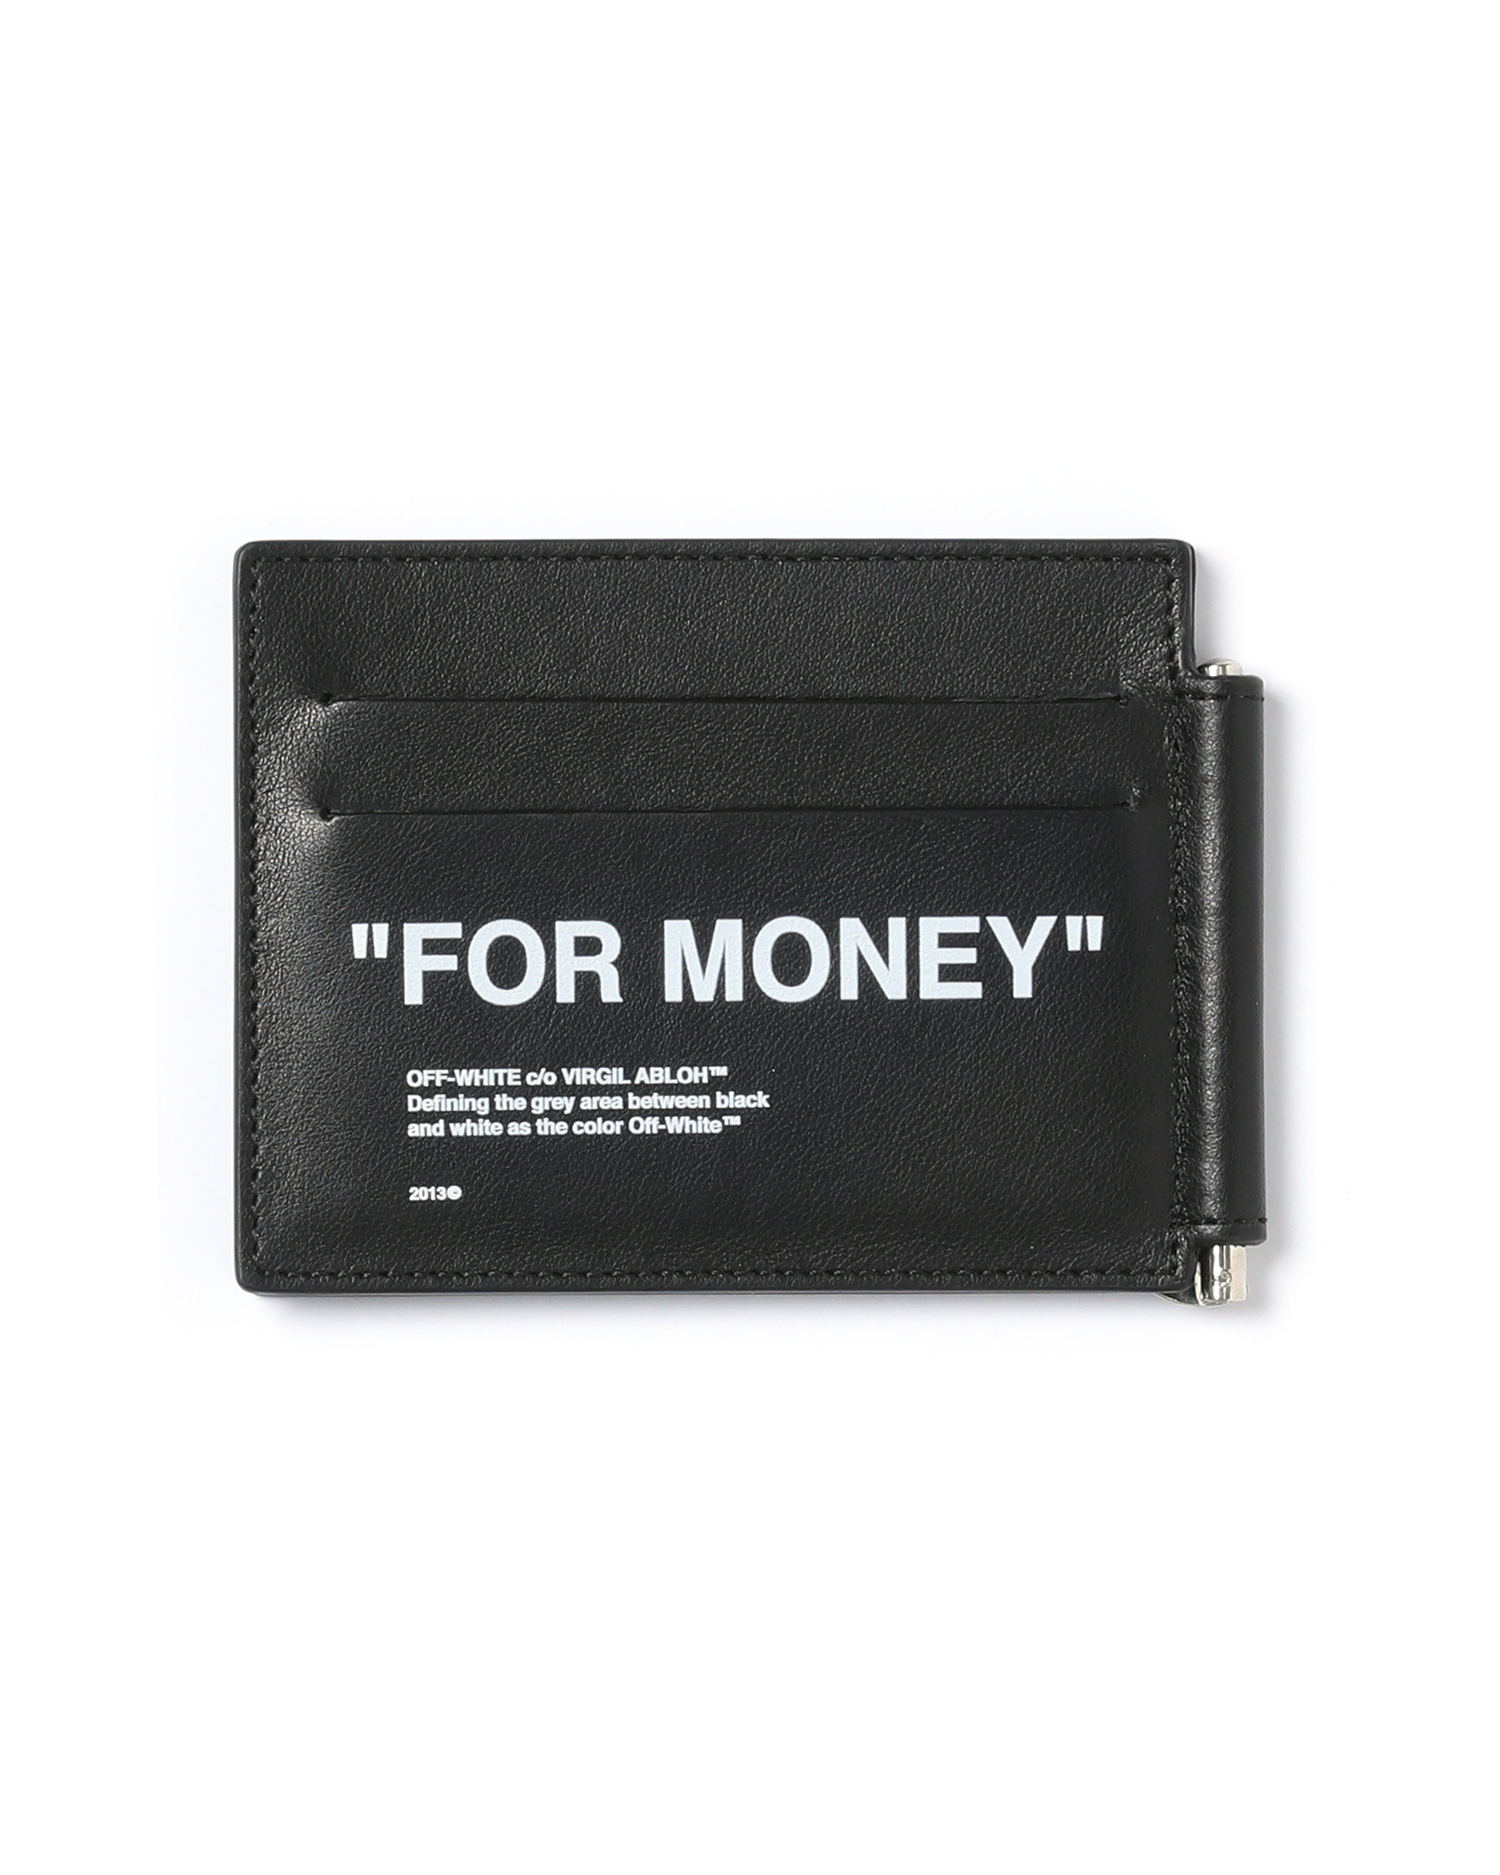 fendi money clip wallet